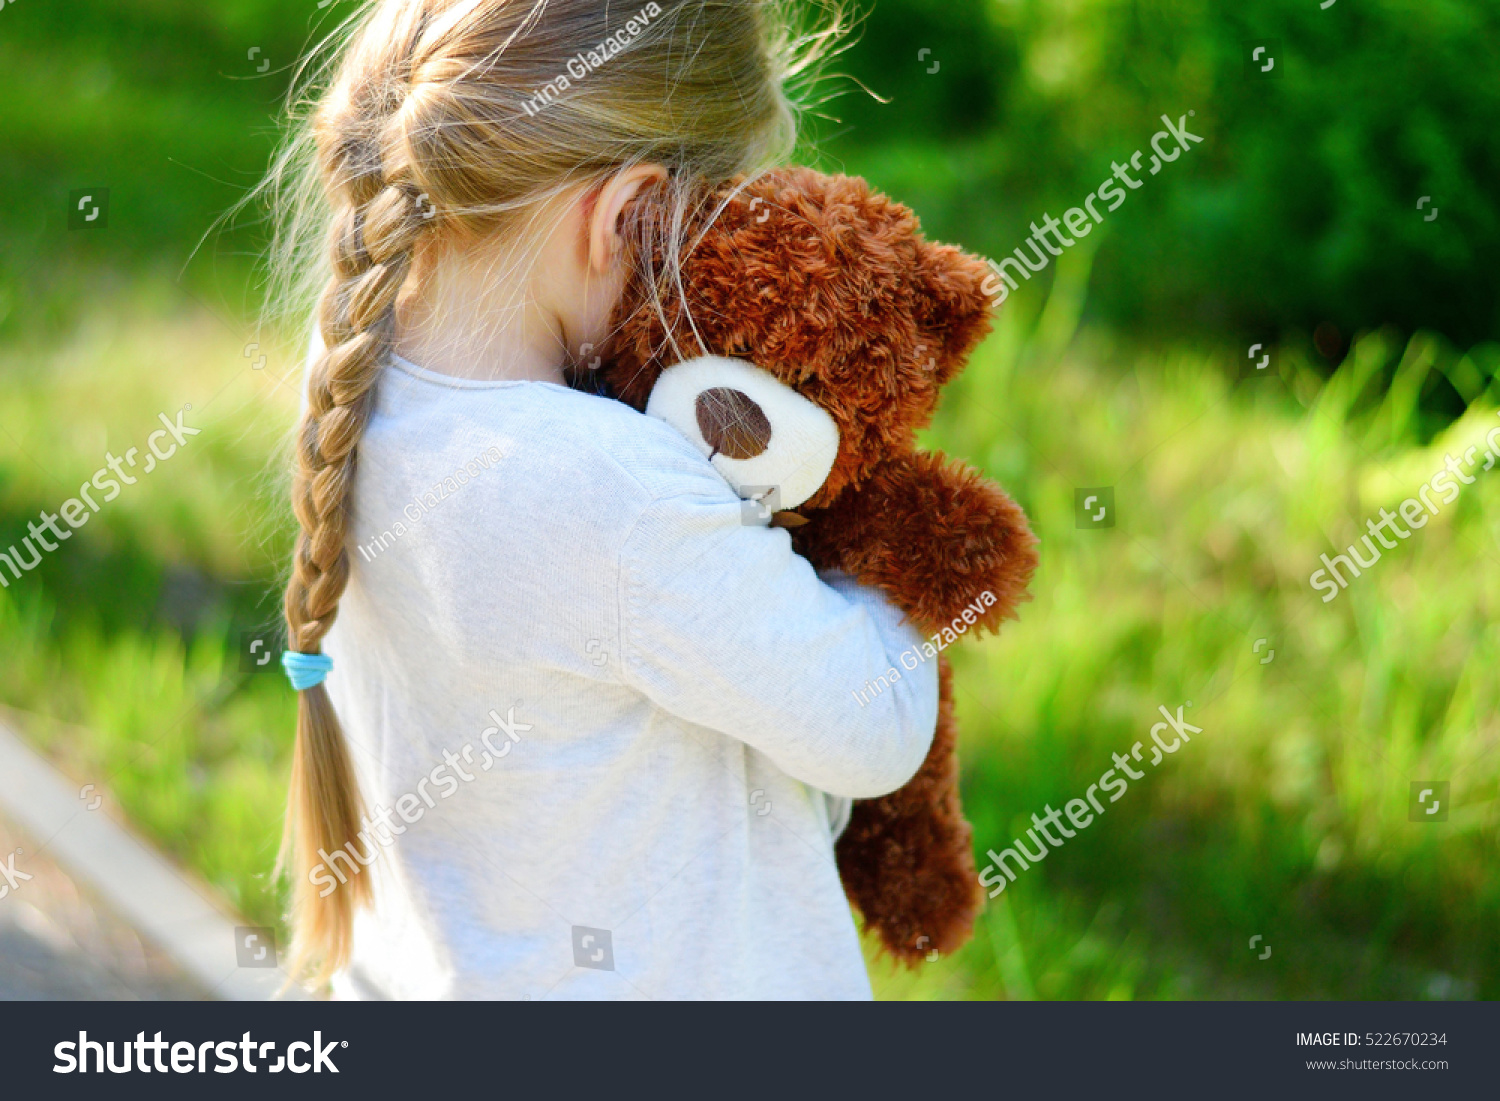 girl and teddy